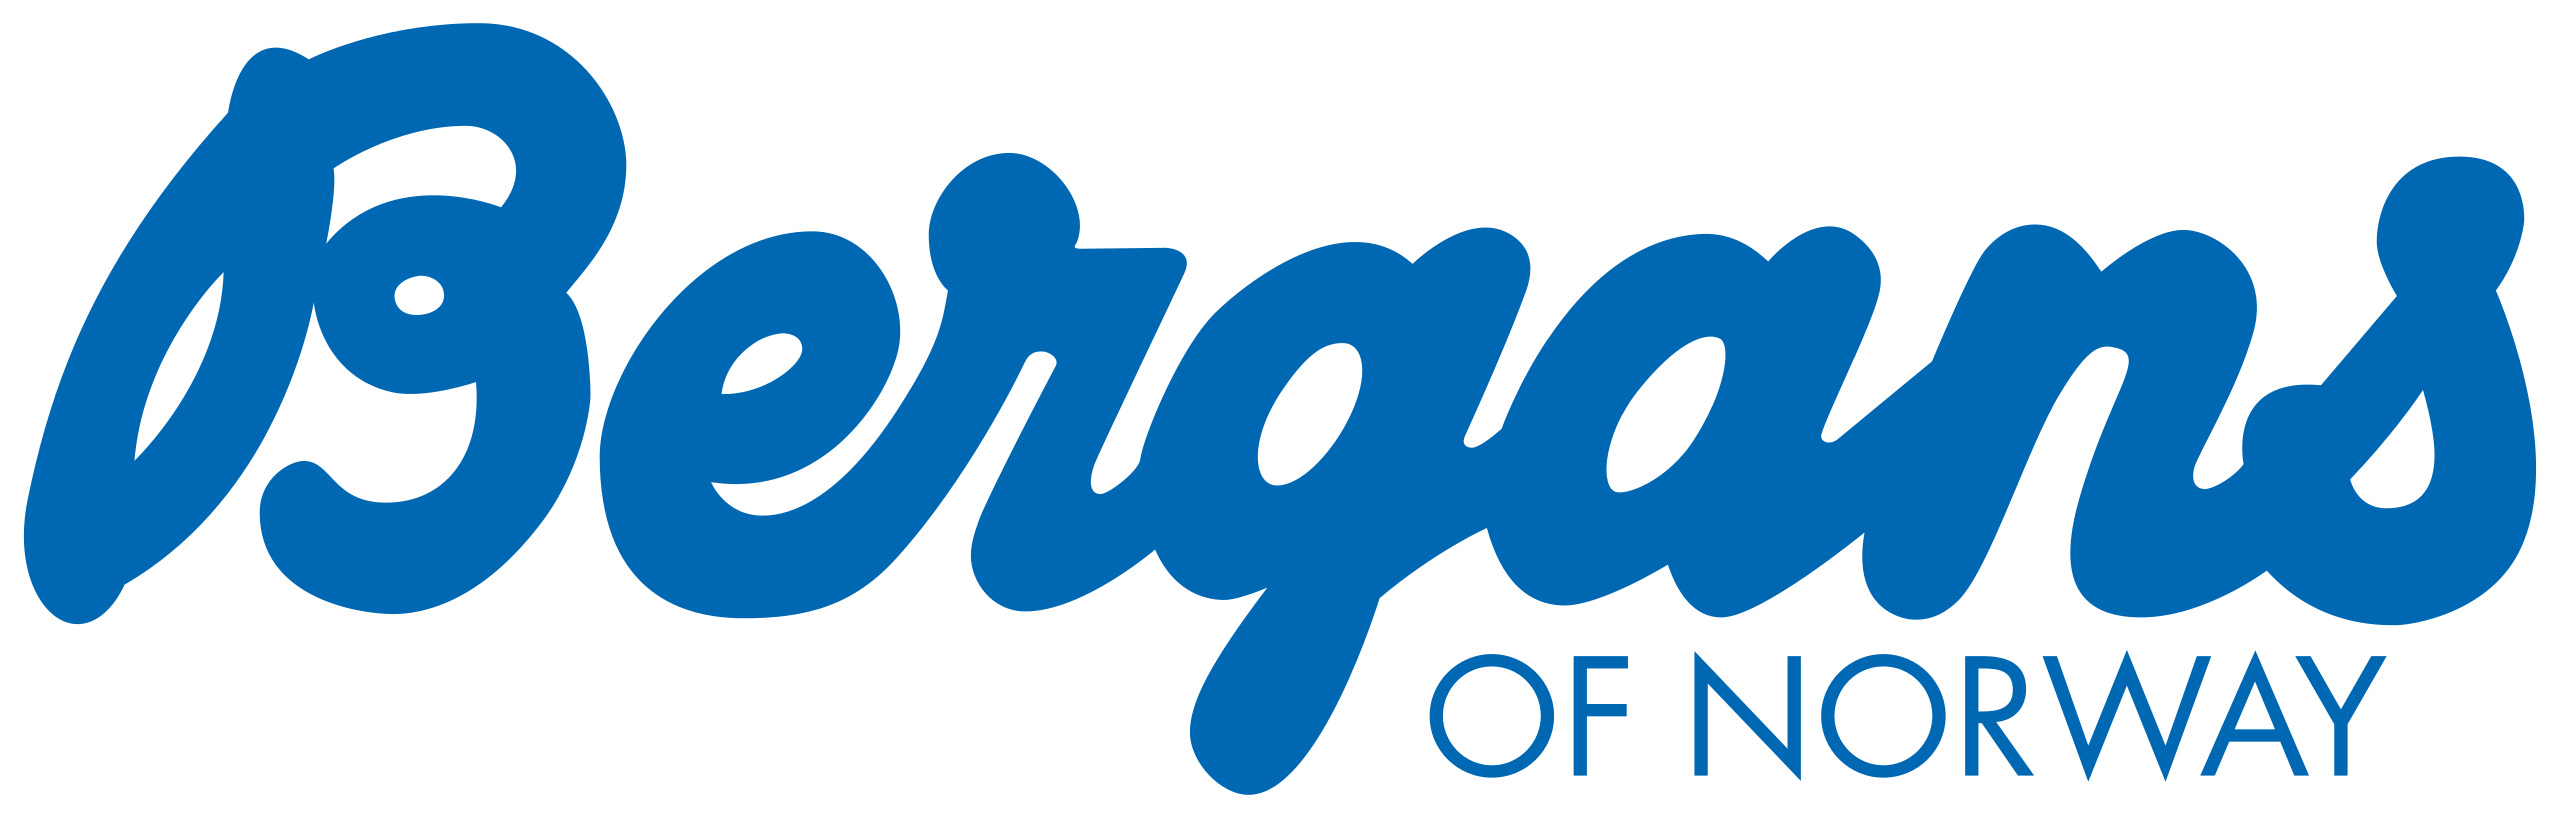 Bergans_logo